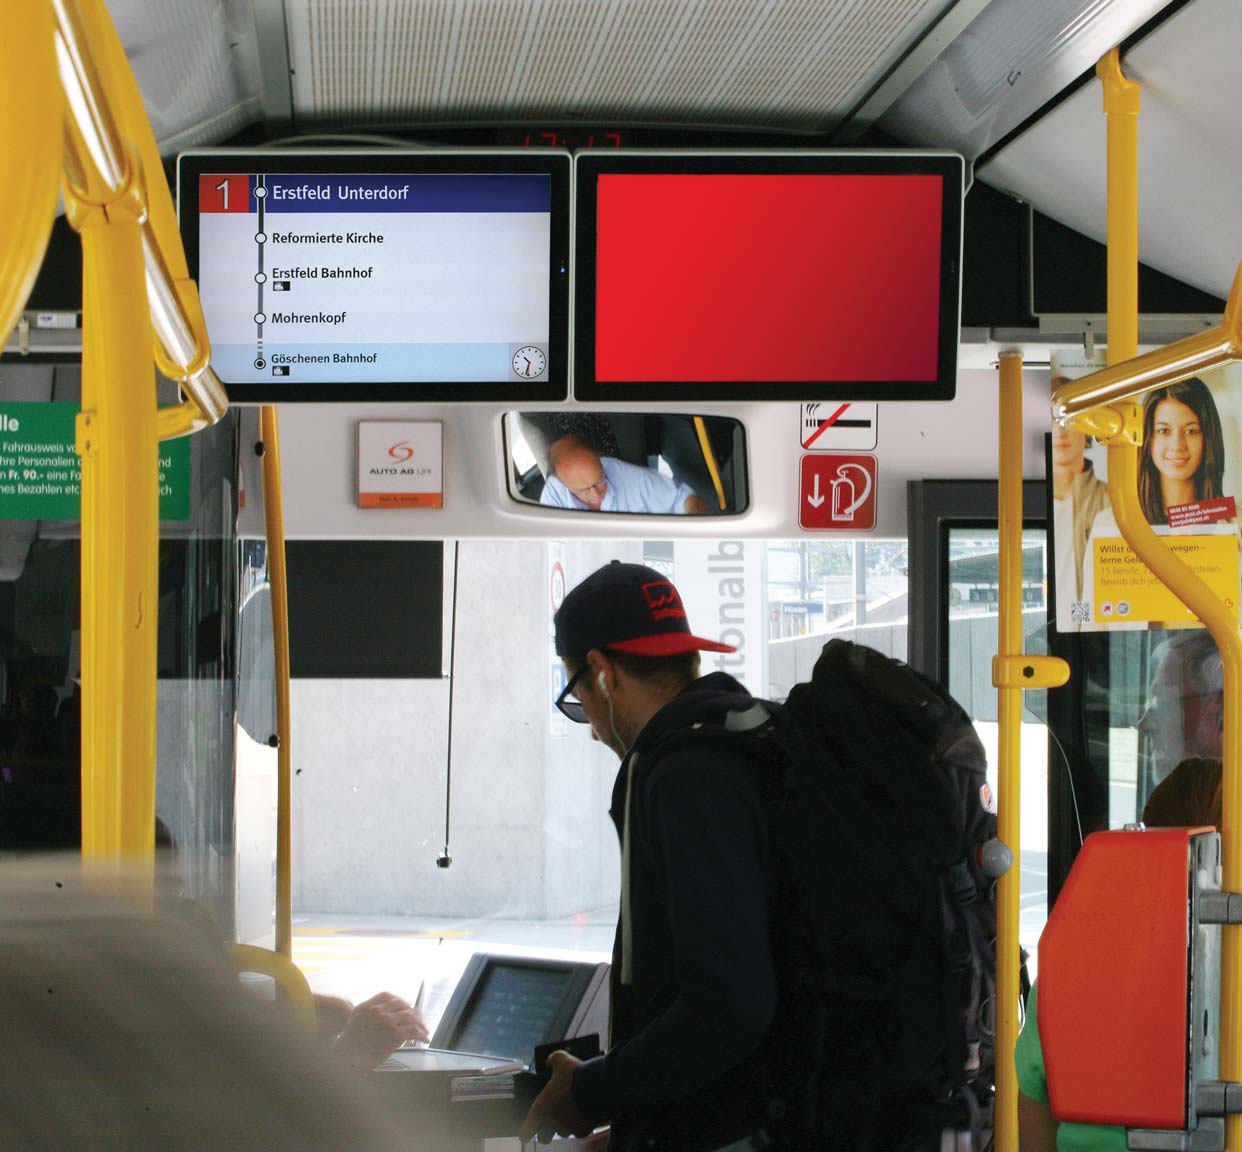 Bildschirmwerbung im Bus TrafficMediaScreen